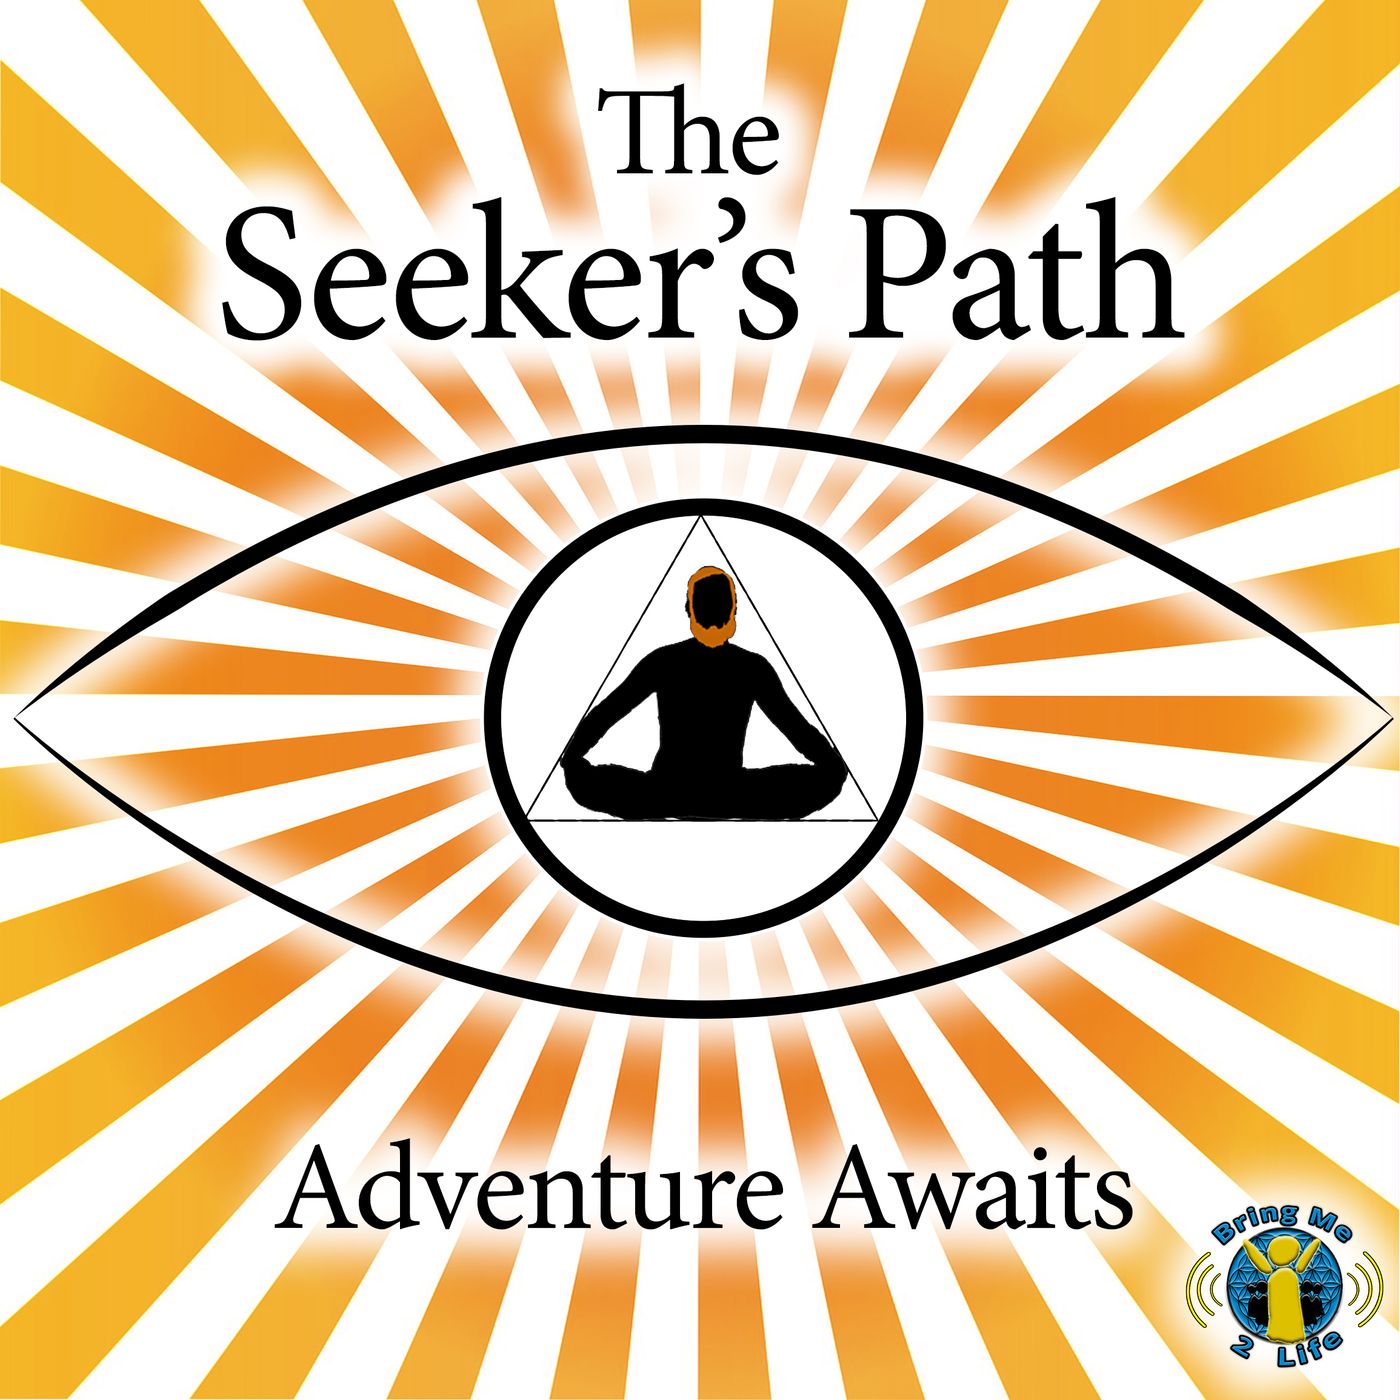 The Seeker's Path